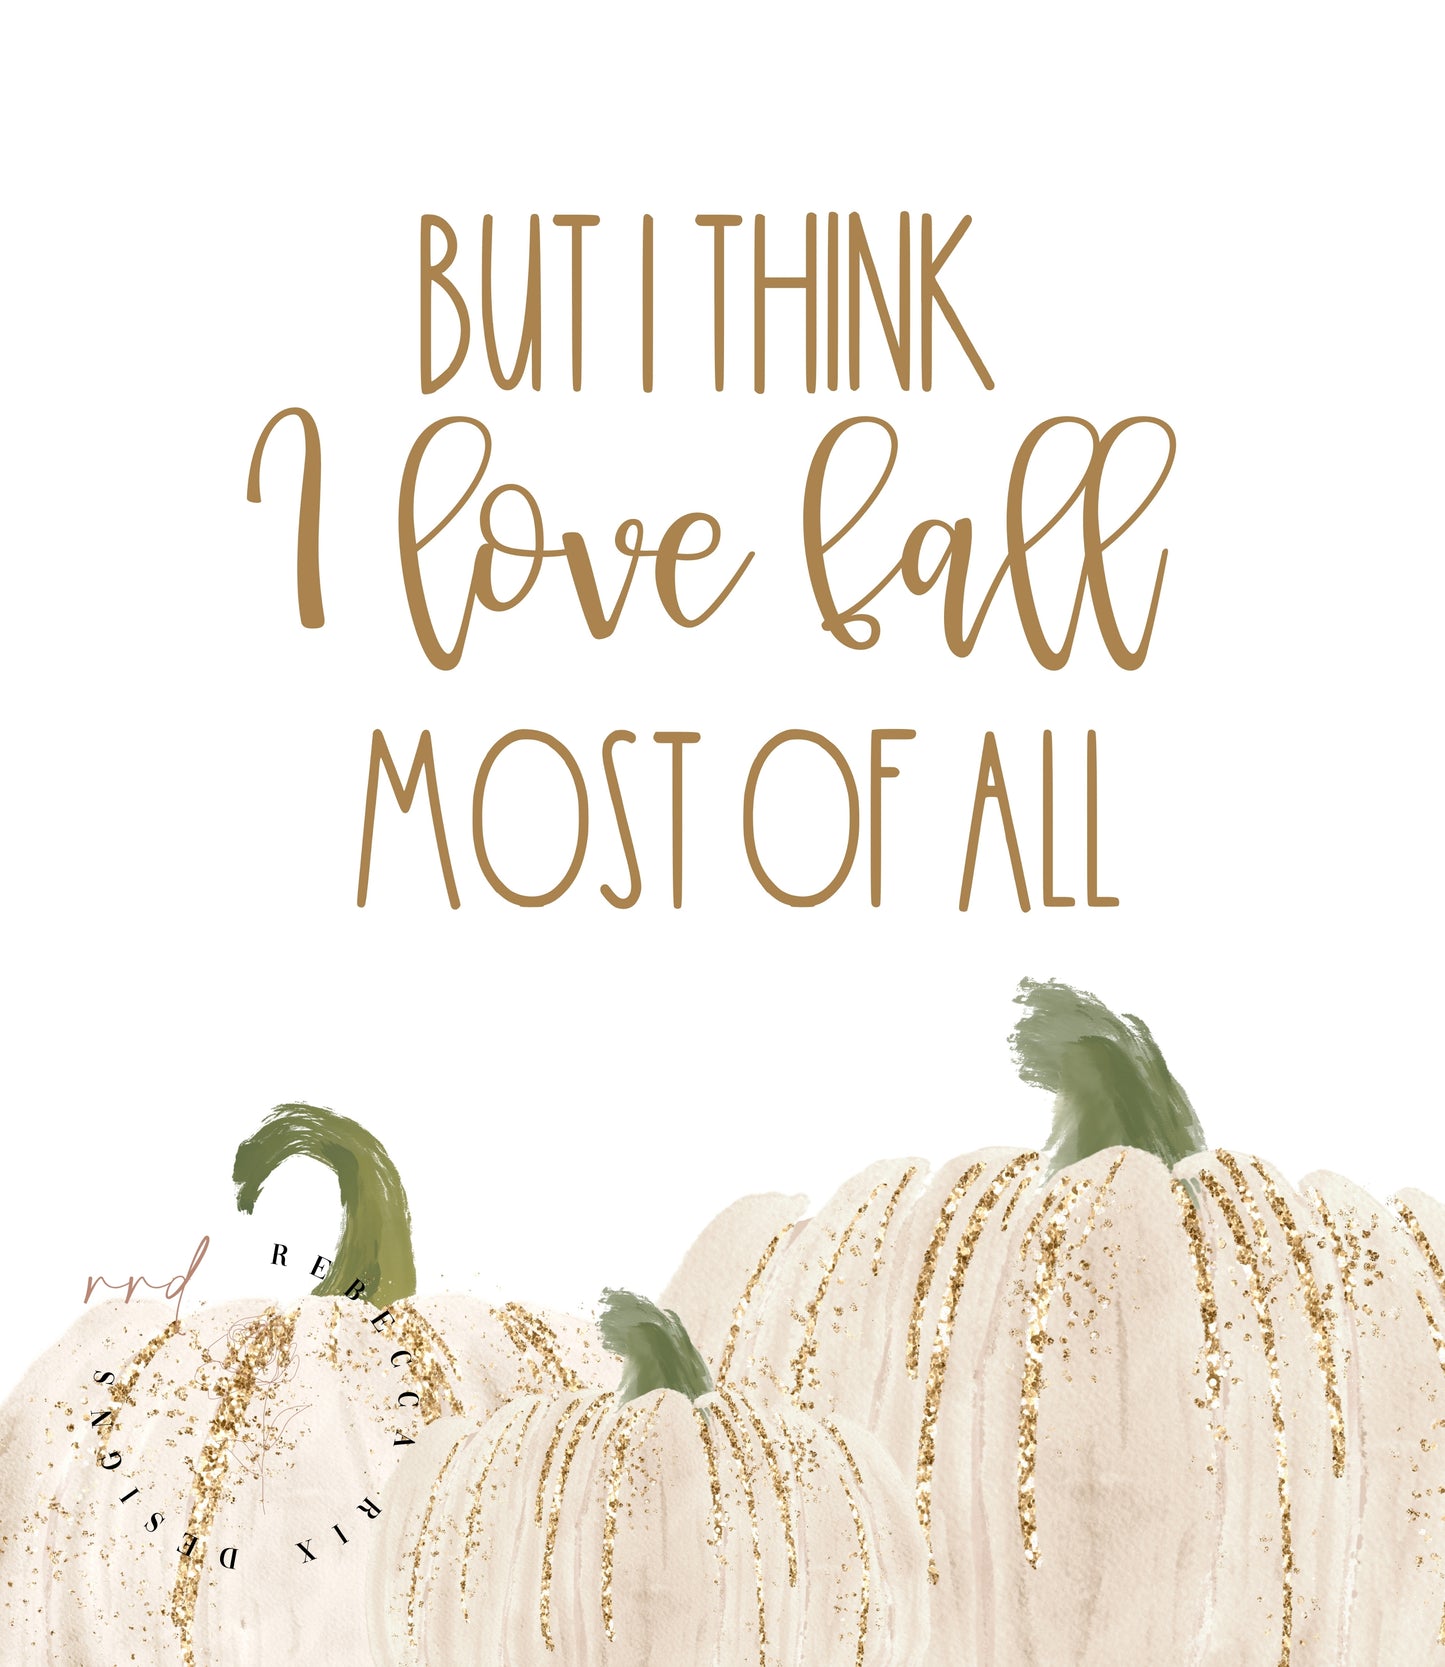 Set of 3 Fall/Autumn Prints White White And Gold Pumpkins, Farmhouse Chic, Printable Wall Art